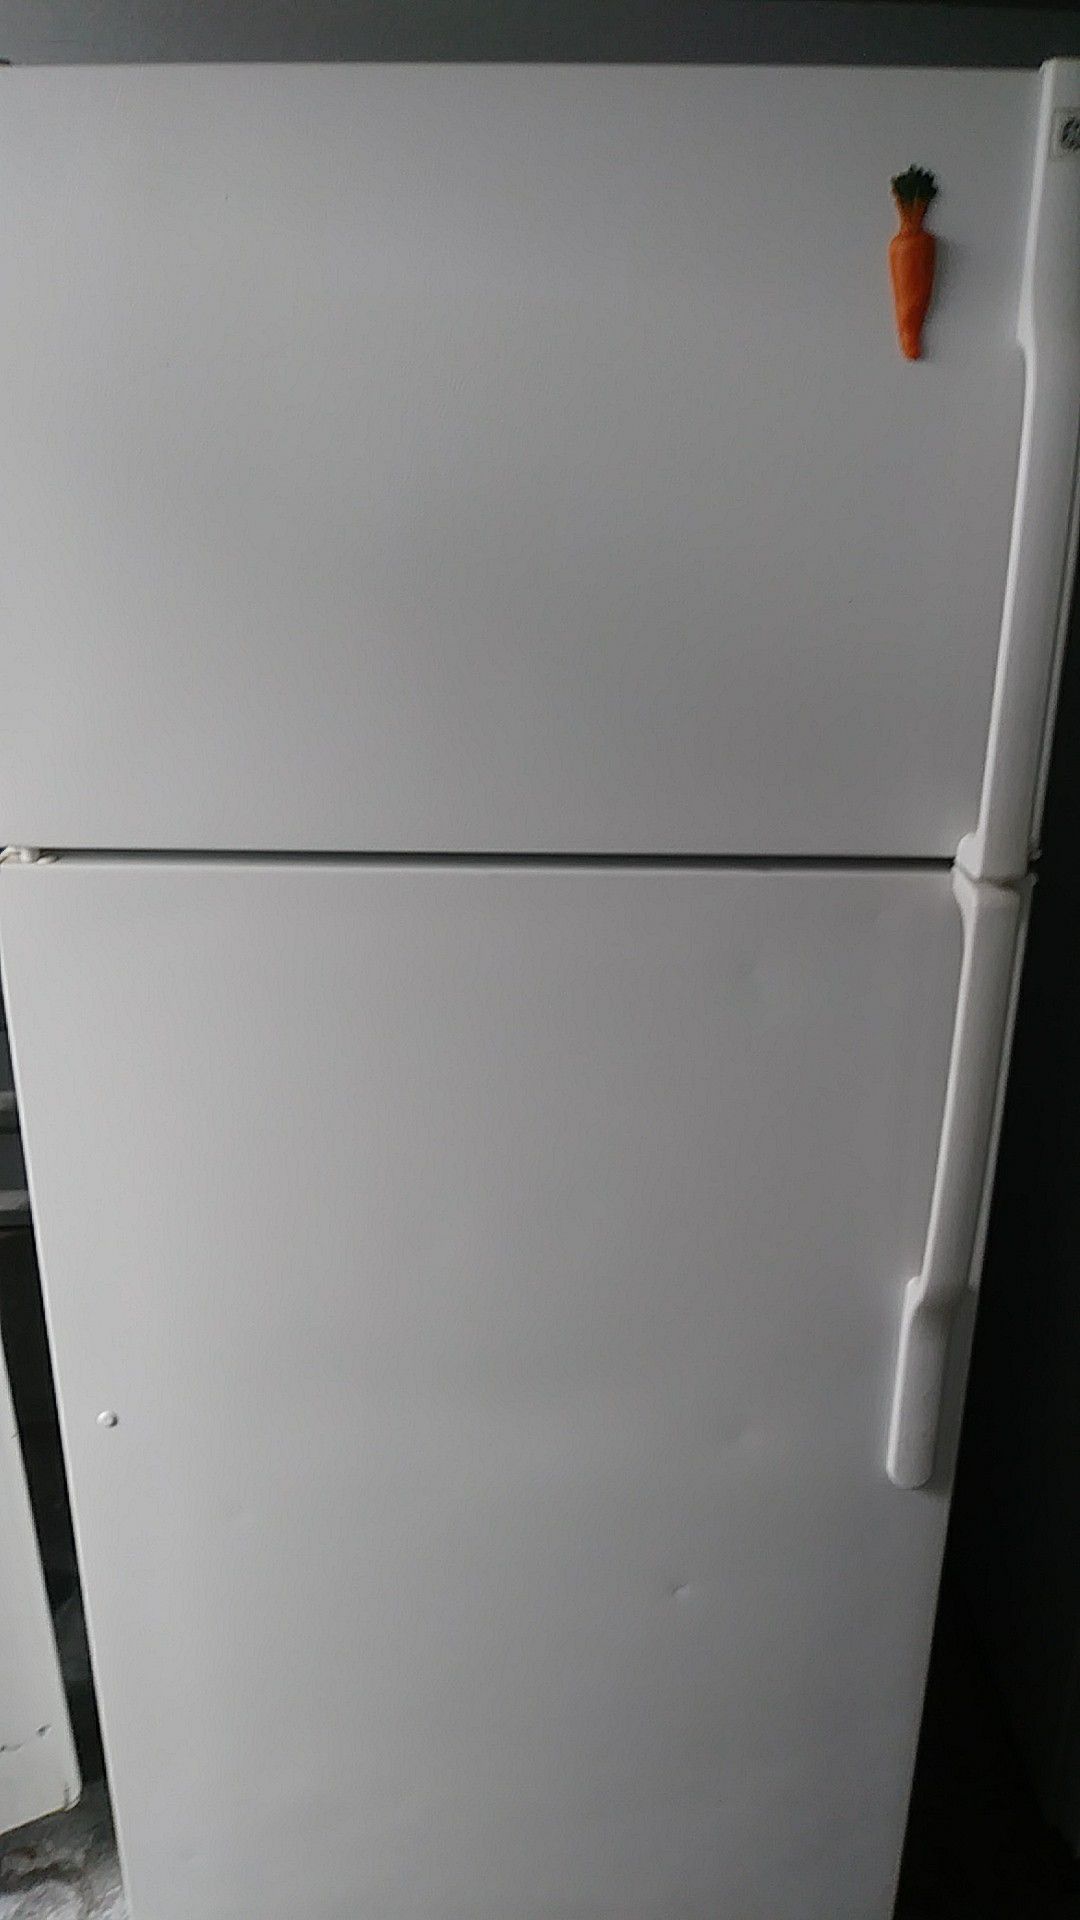 GE refrigerator